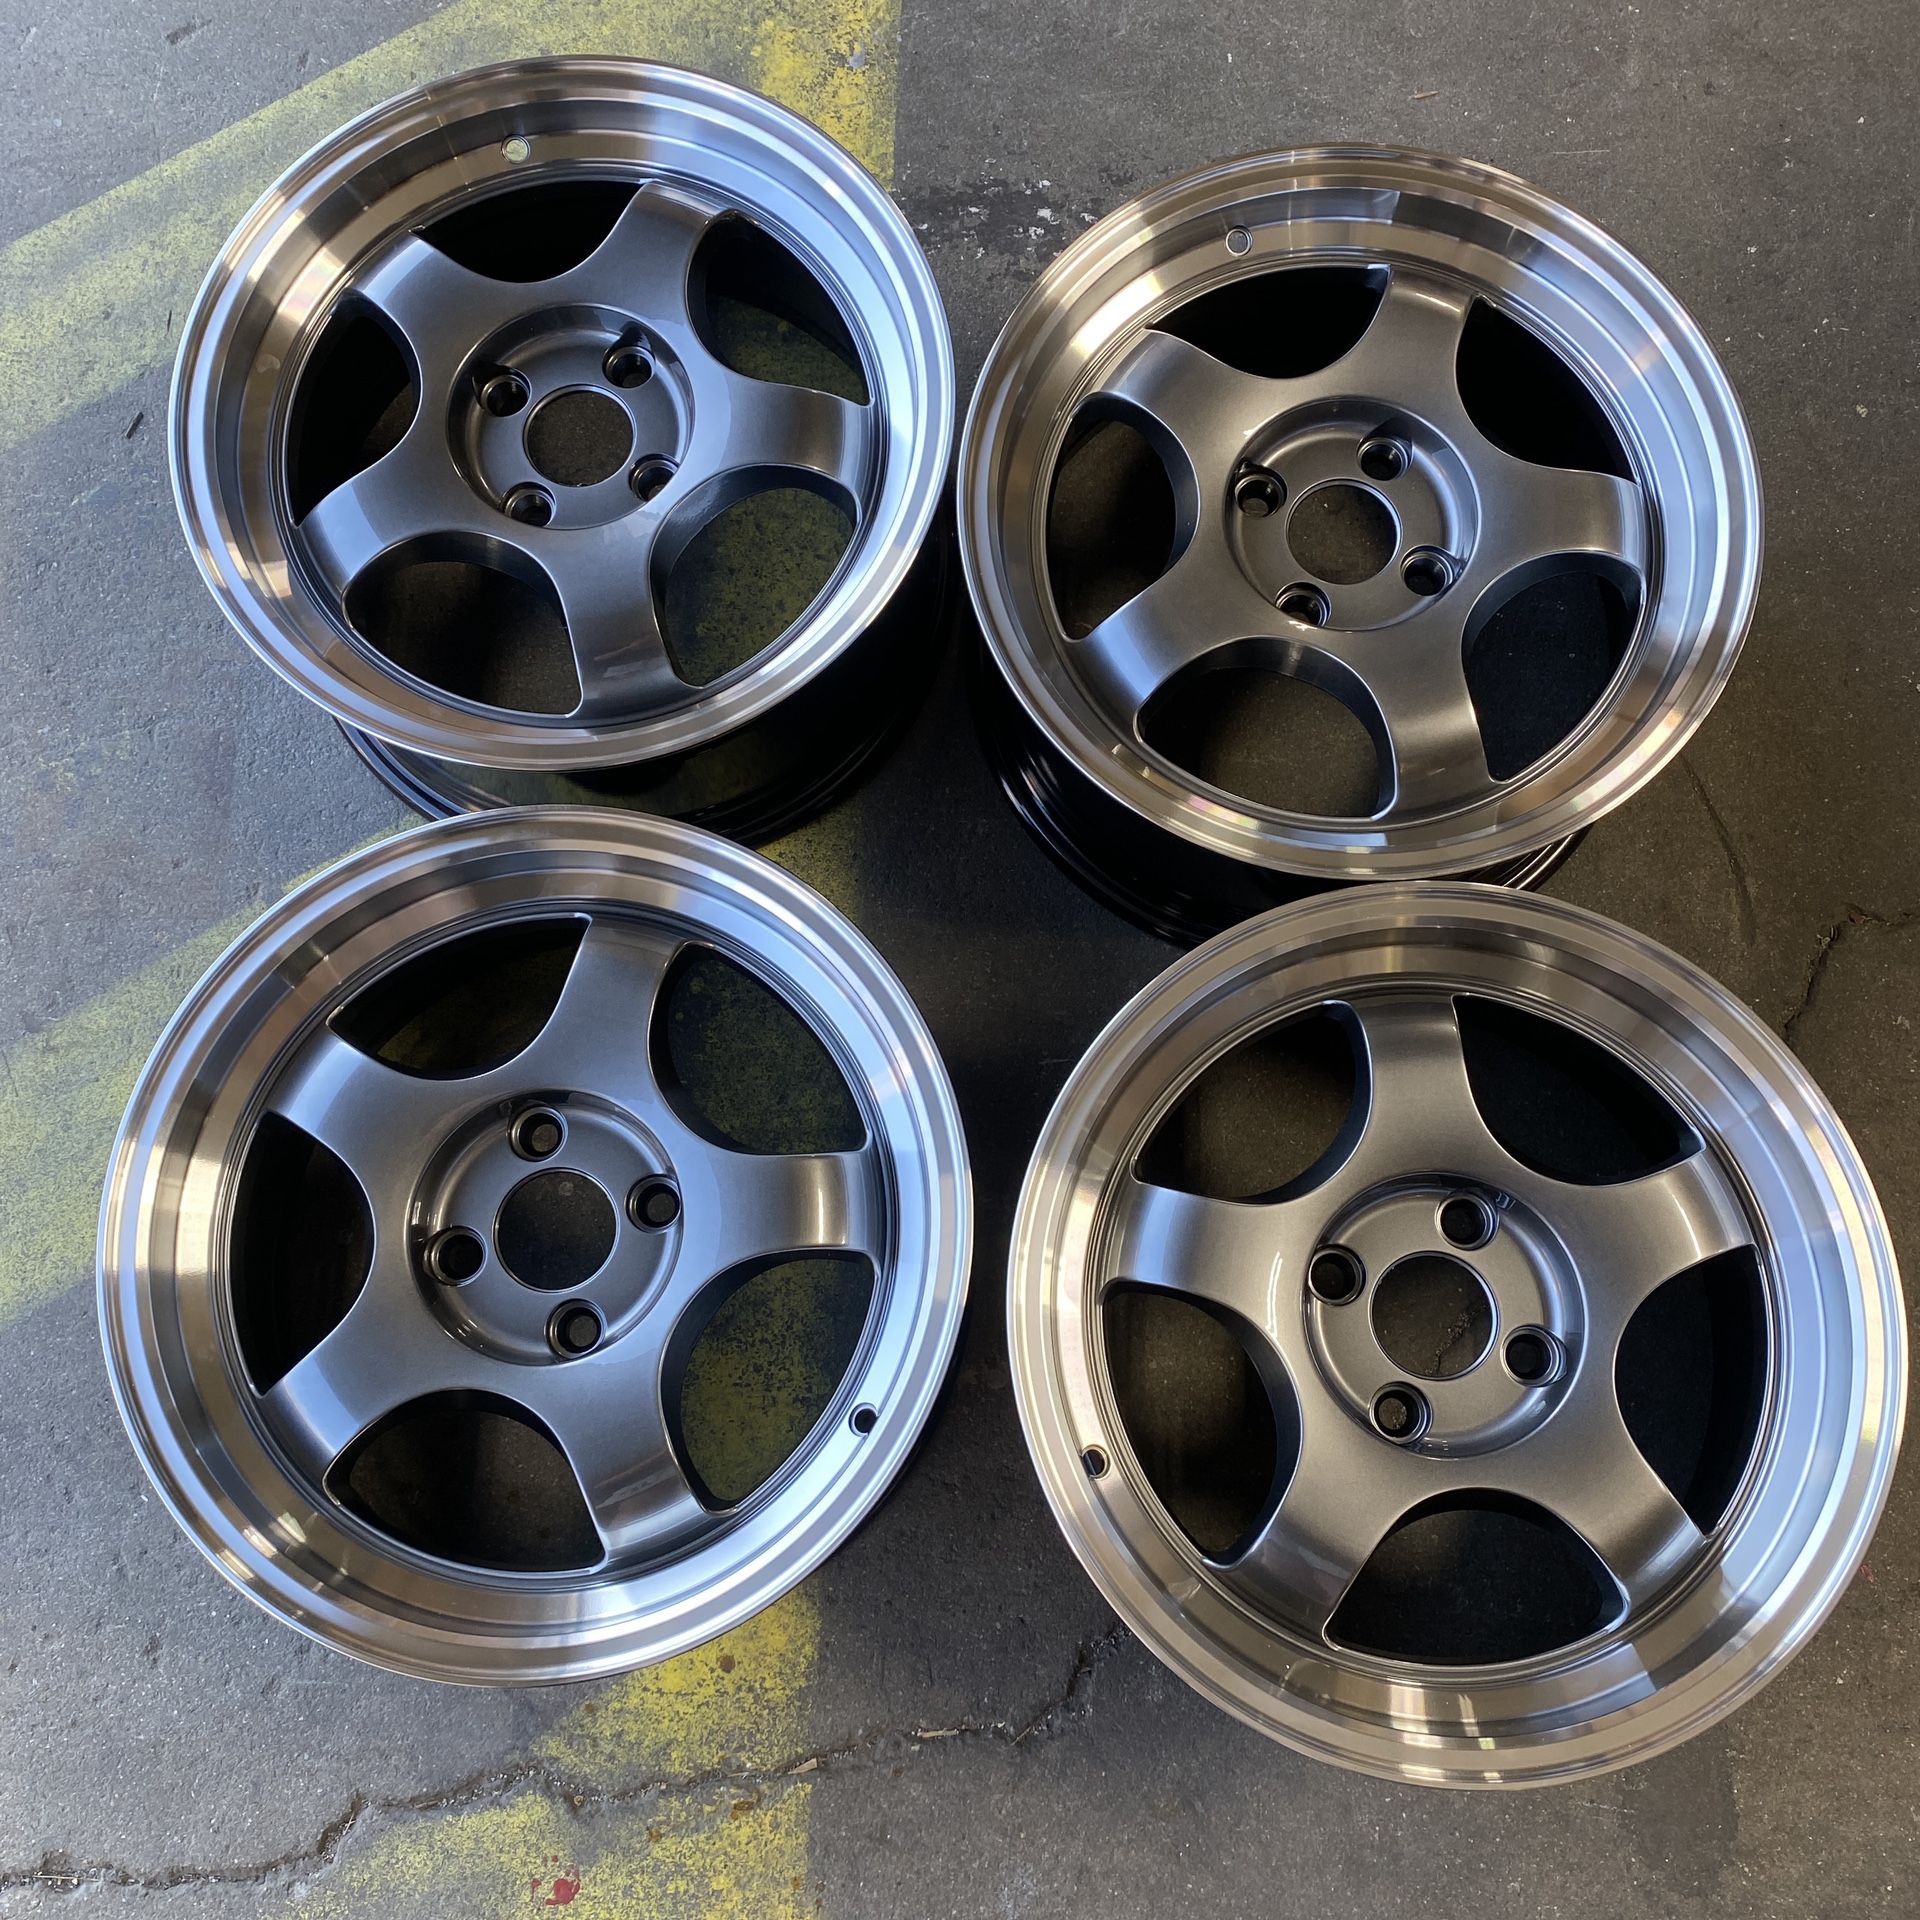 SSR Professor SP1 Style Black Edge Wheels Set of 4 Rims 15"" 7J +35 (4x100) New